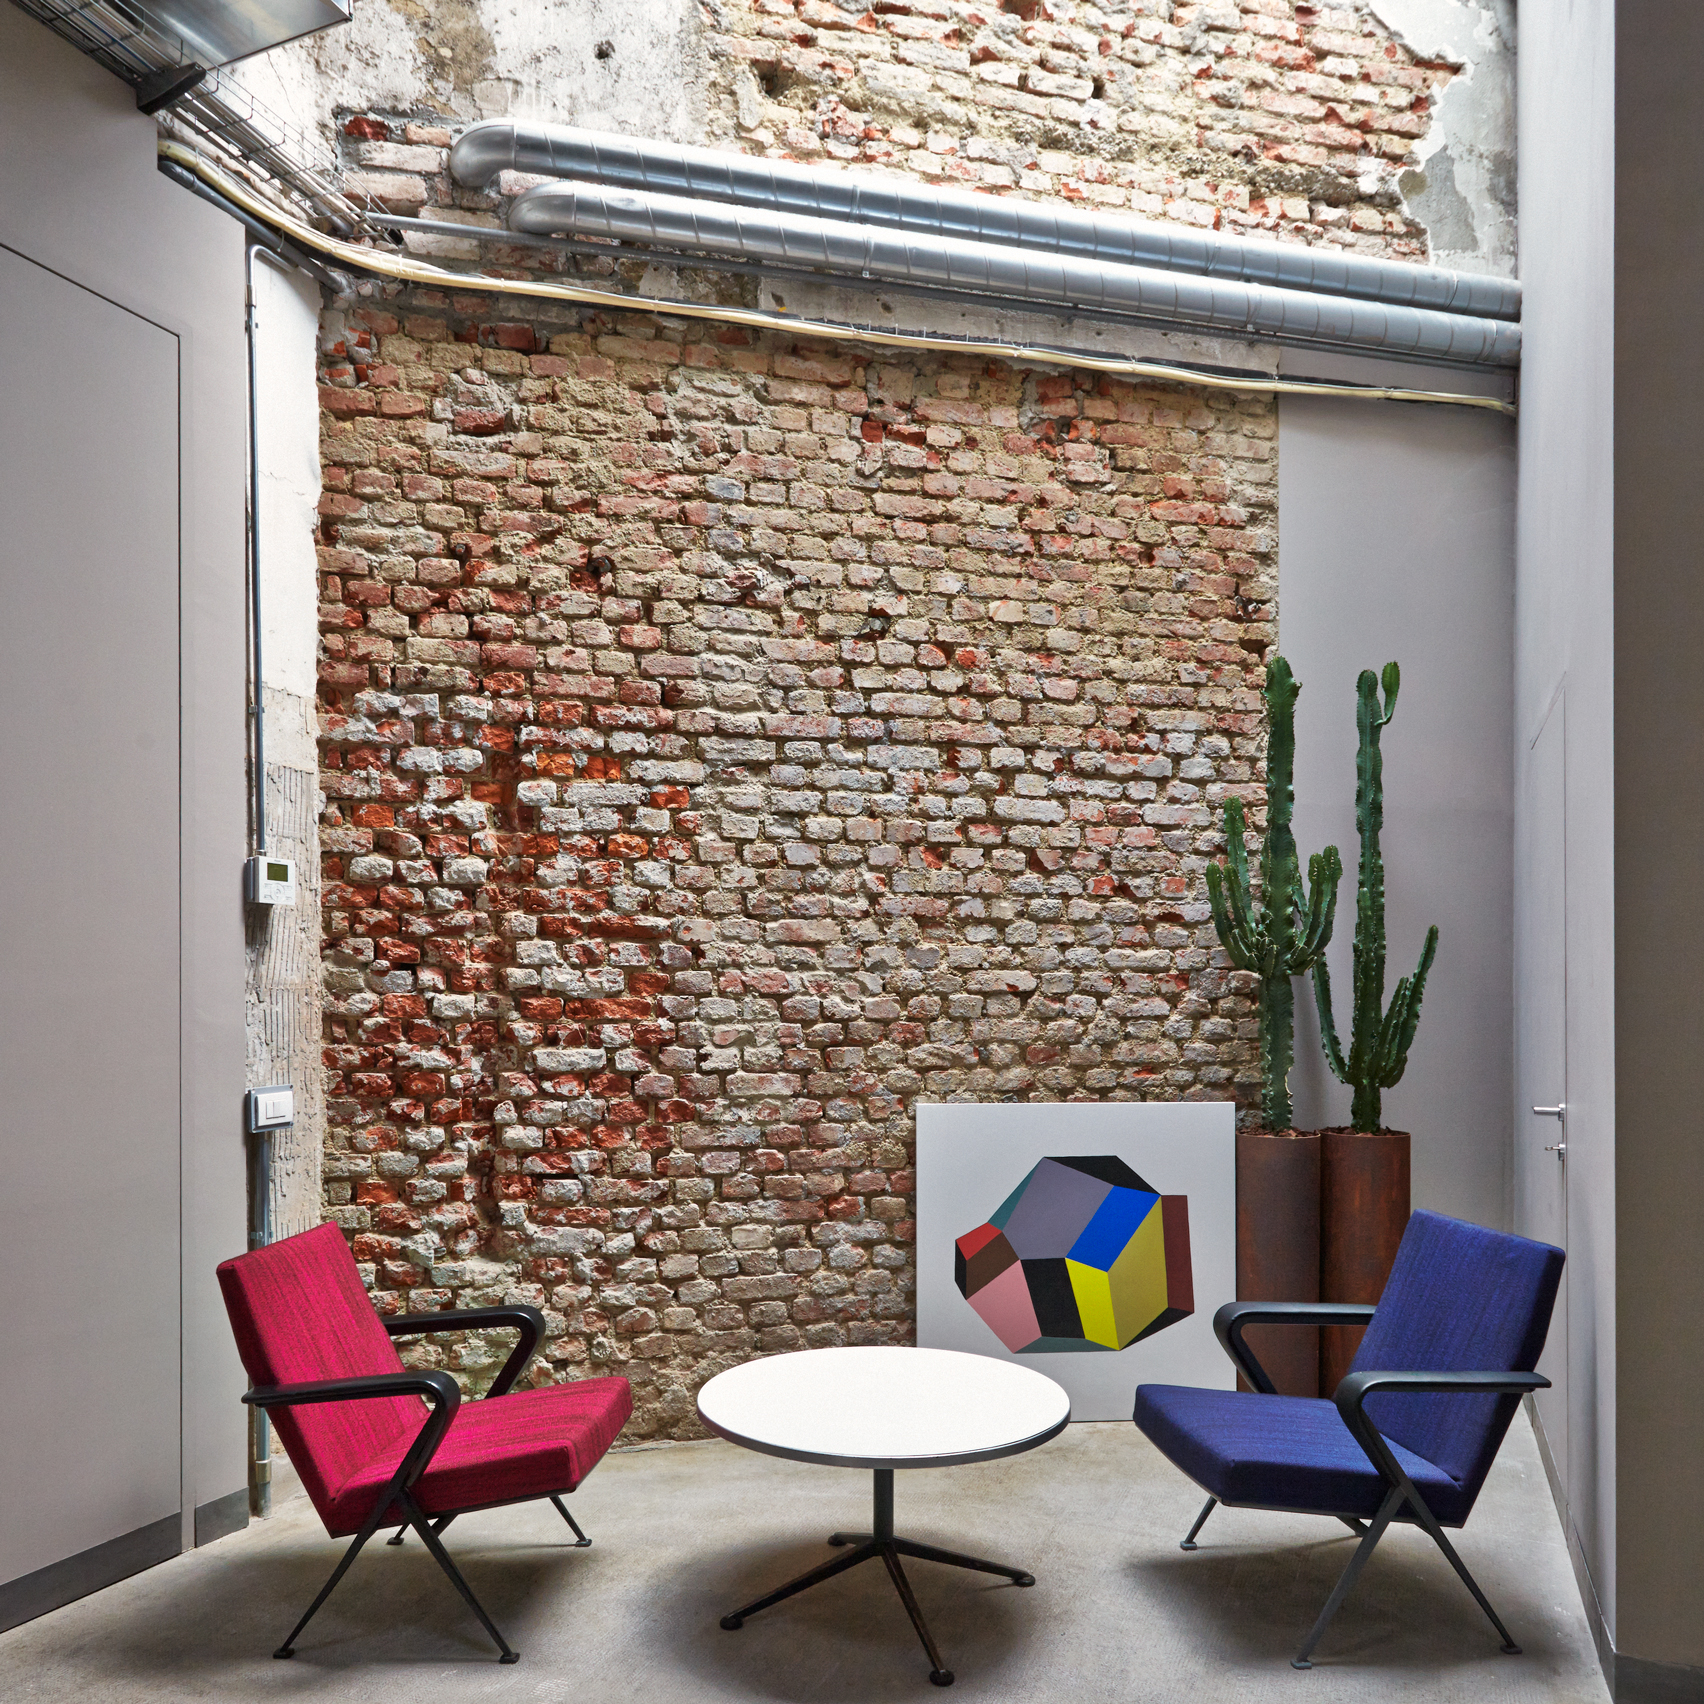 MSGM Headquarters by Fabio Ferillo on the top 10 brick interiors on Dezeen's Pinterest boards